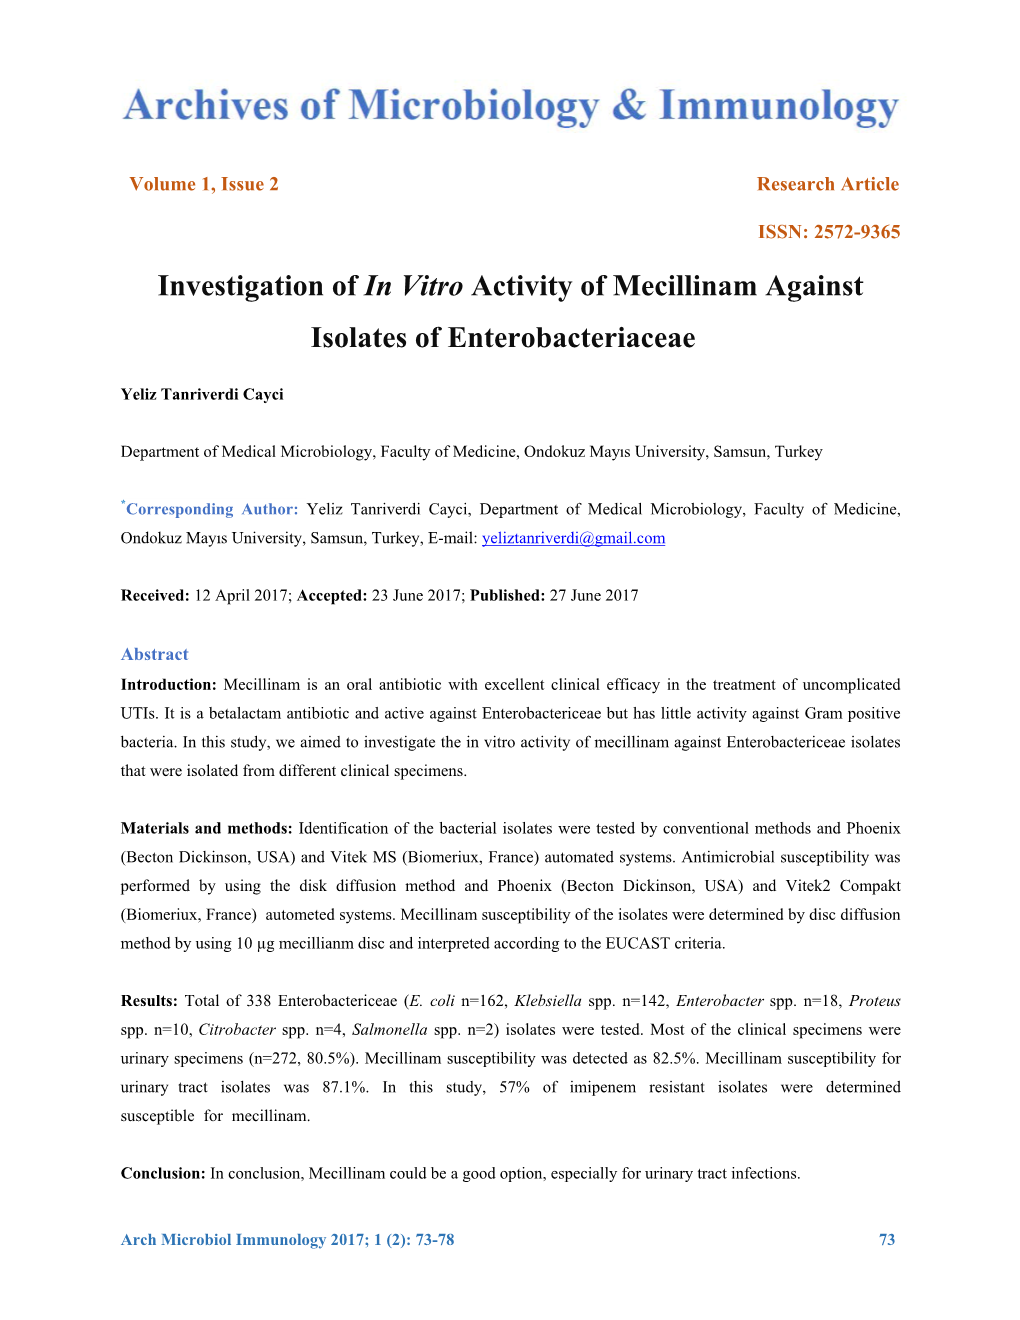 Investigation of in Vitro Activity of Mecillinam Against Isolates of Enterobacteriaceae